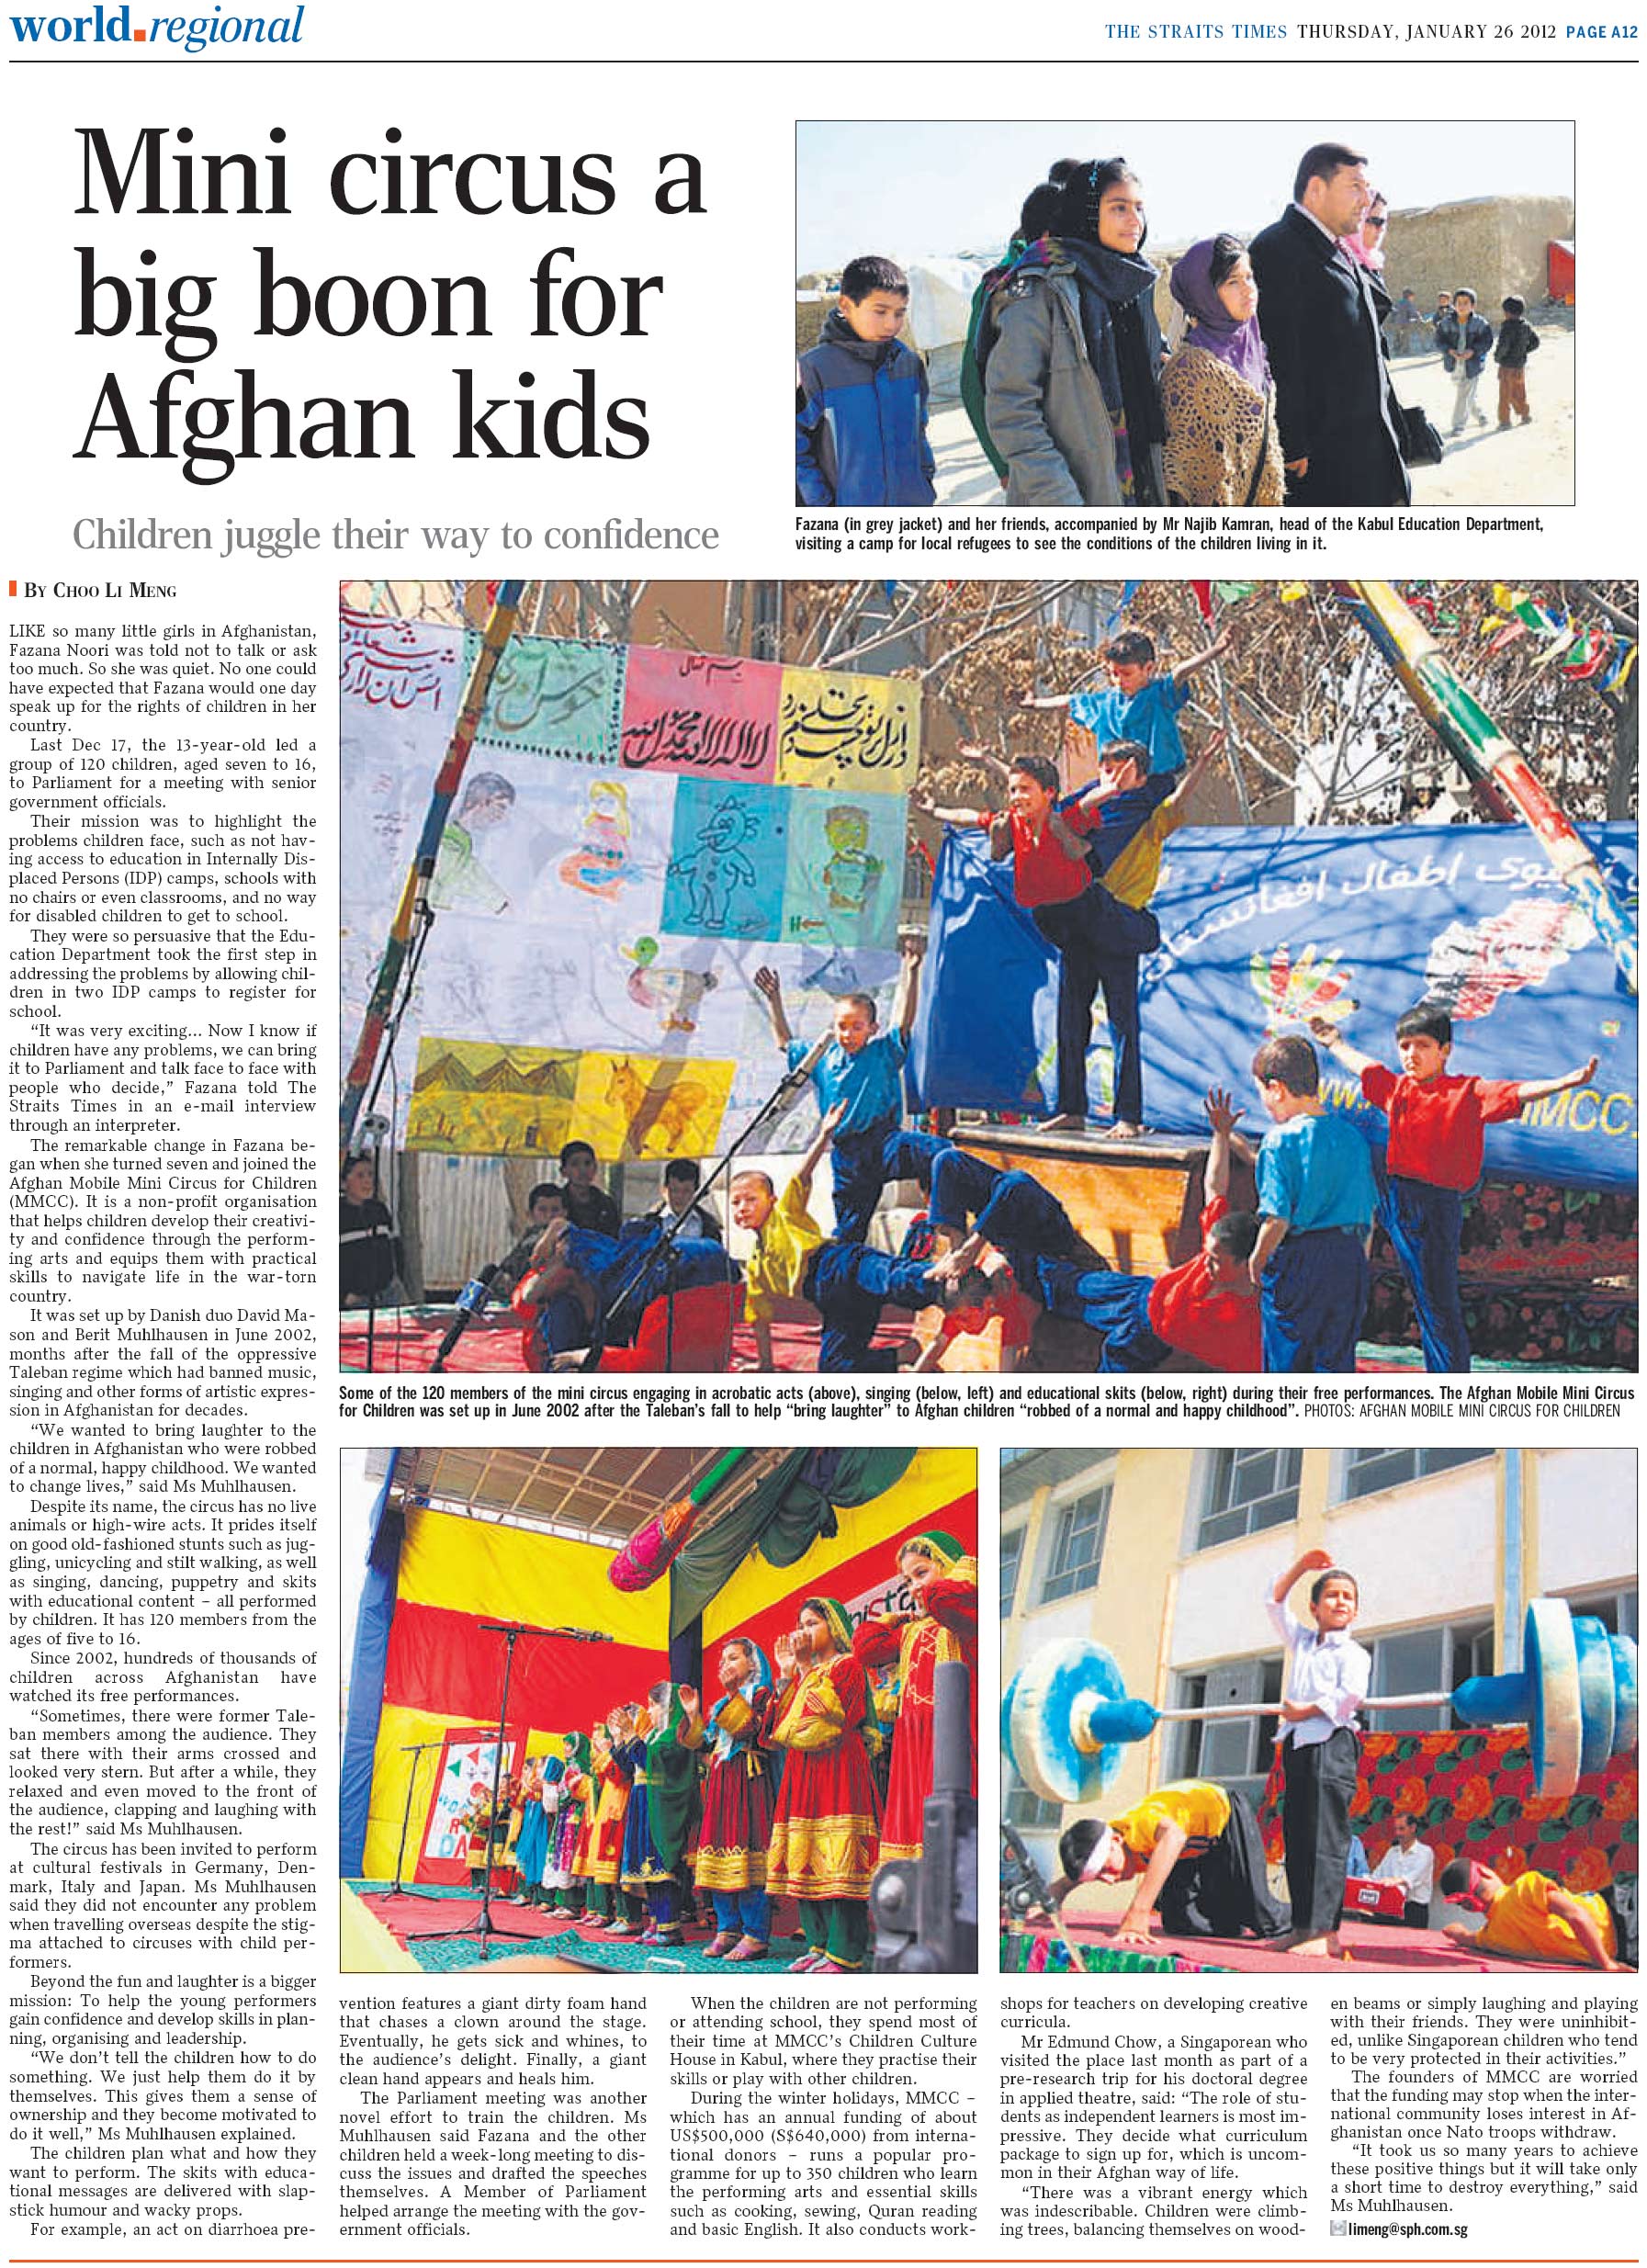 Mini Circus a big boon for Afghan children